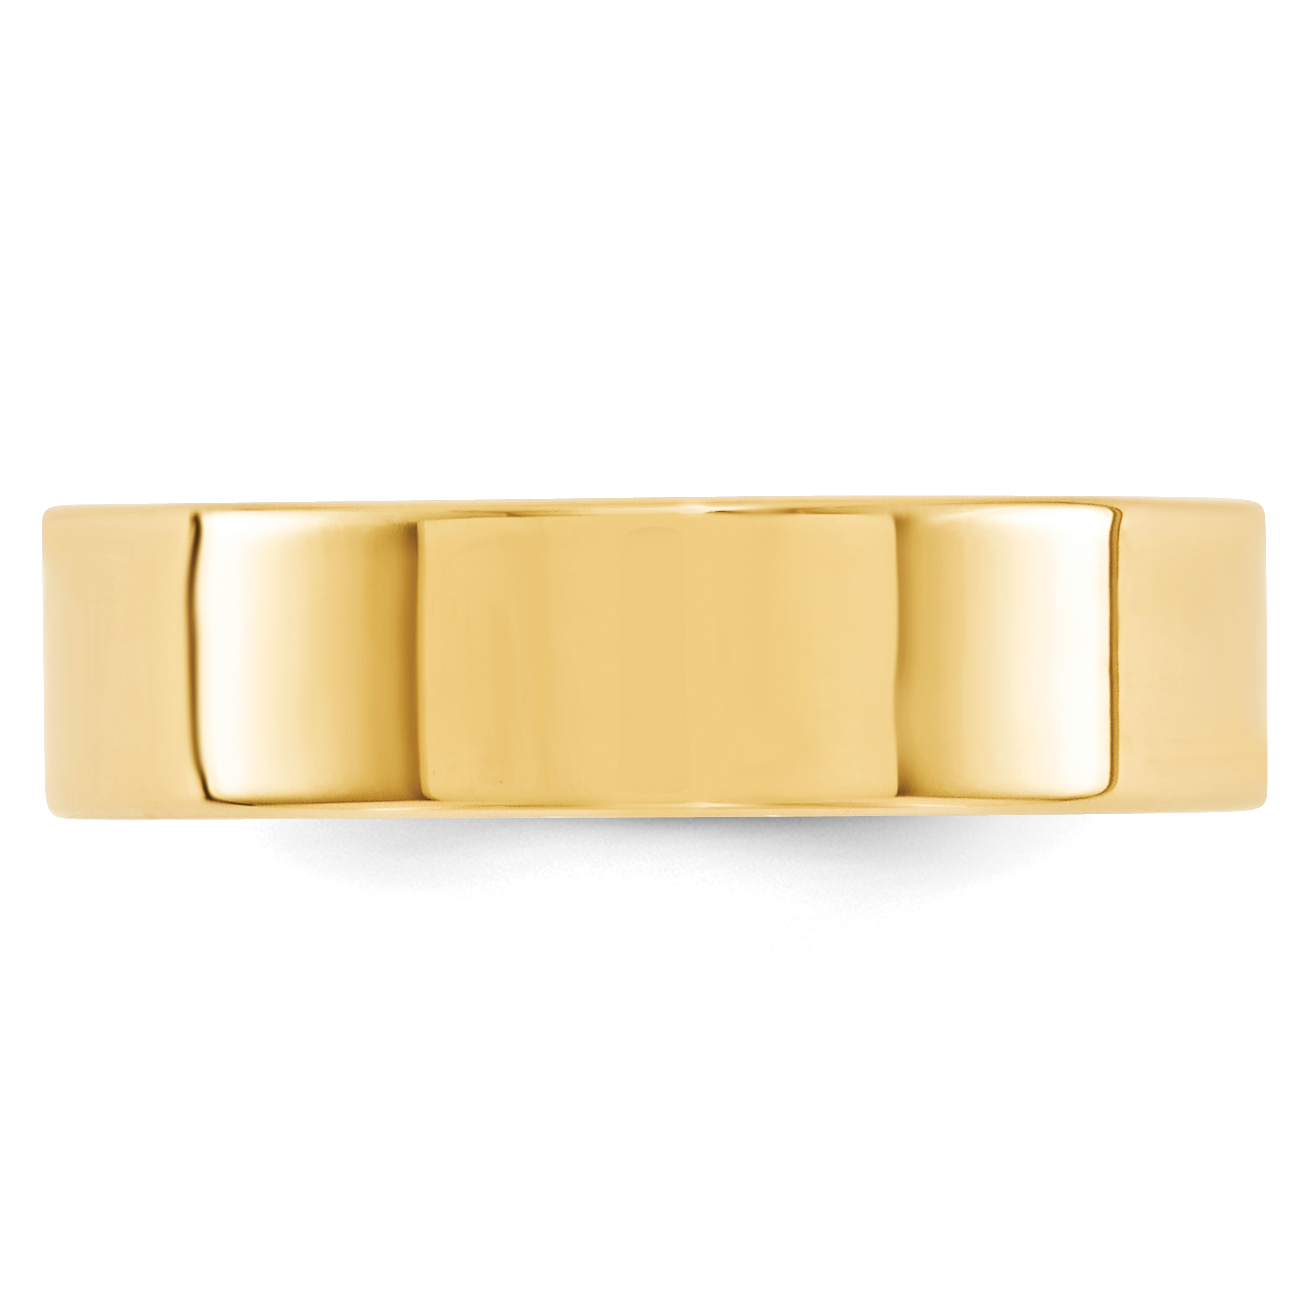 14k Yellow Gold Flat Comfort Fit Wedding Band Ring | eBay